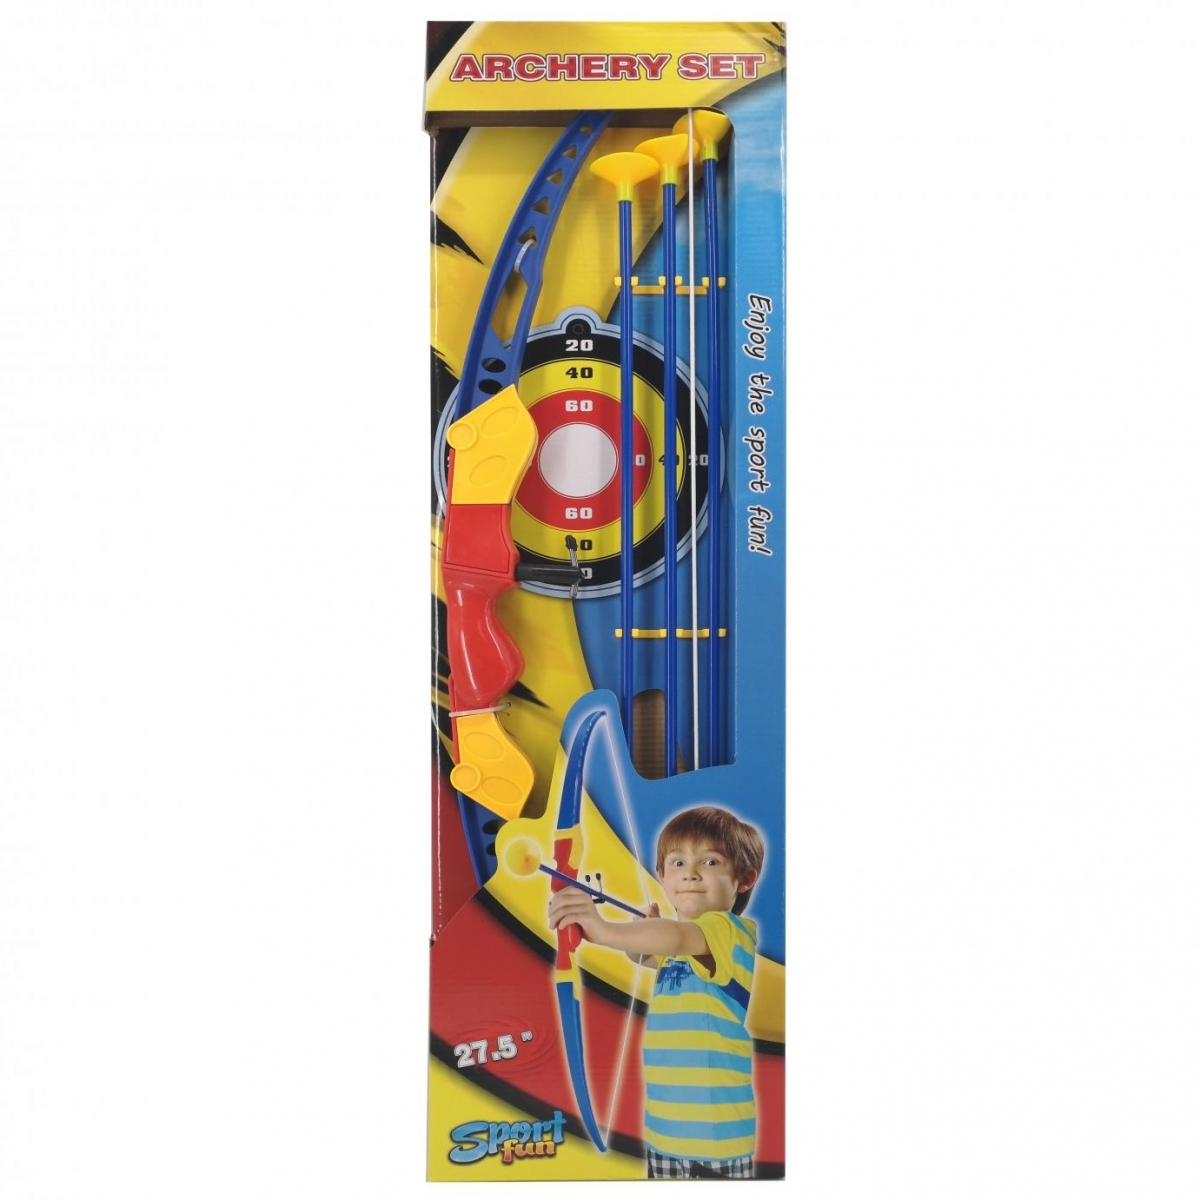     Toy Target Archery set 55011